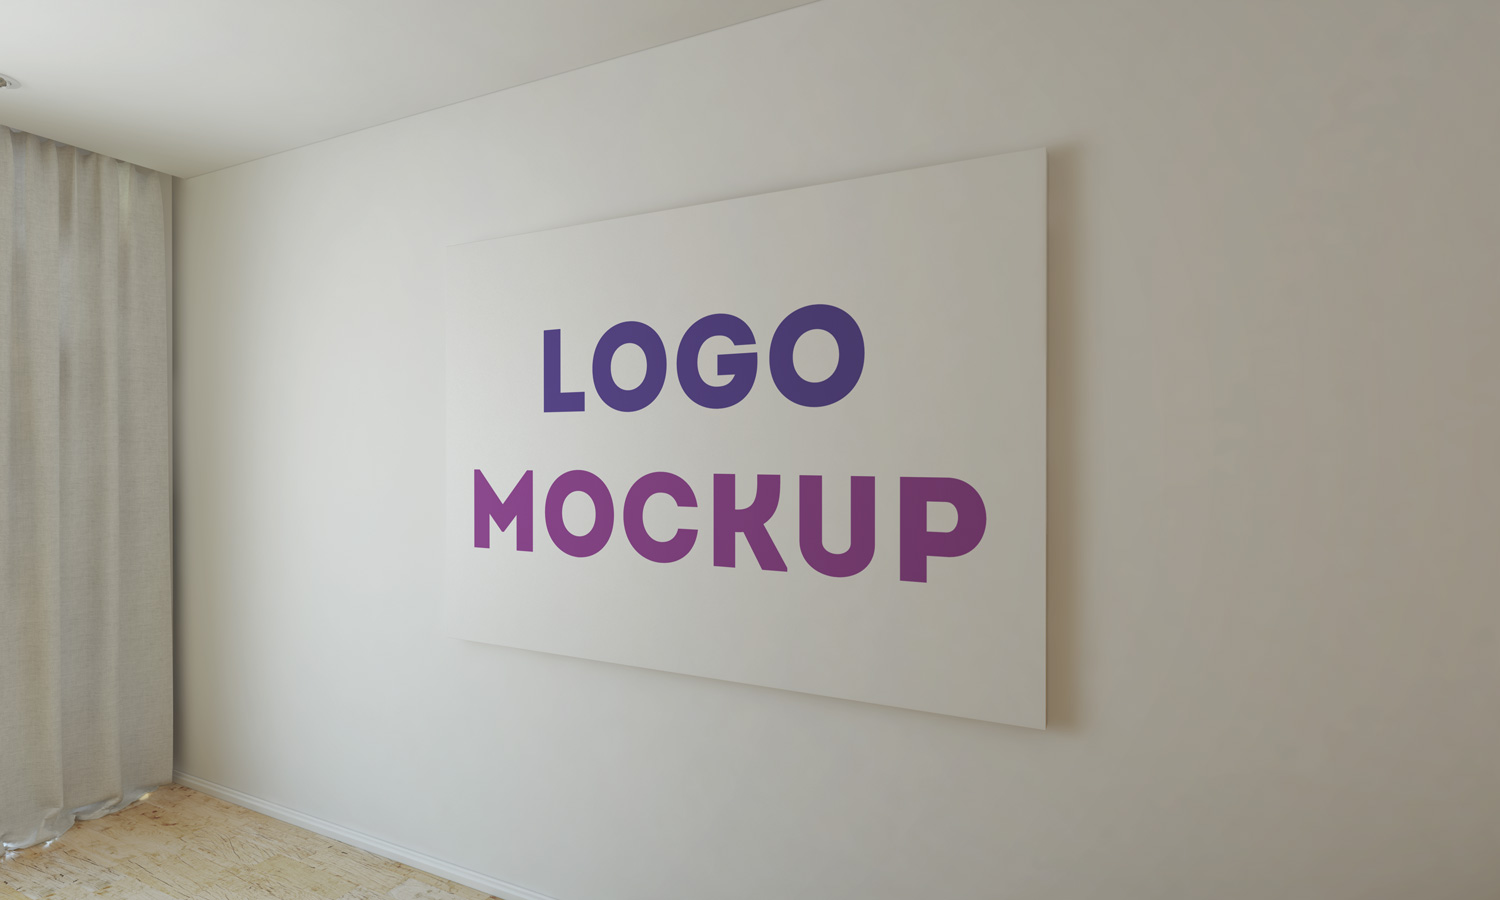 Download Office Wall Logo MockUp Vol 2